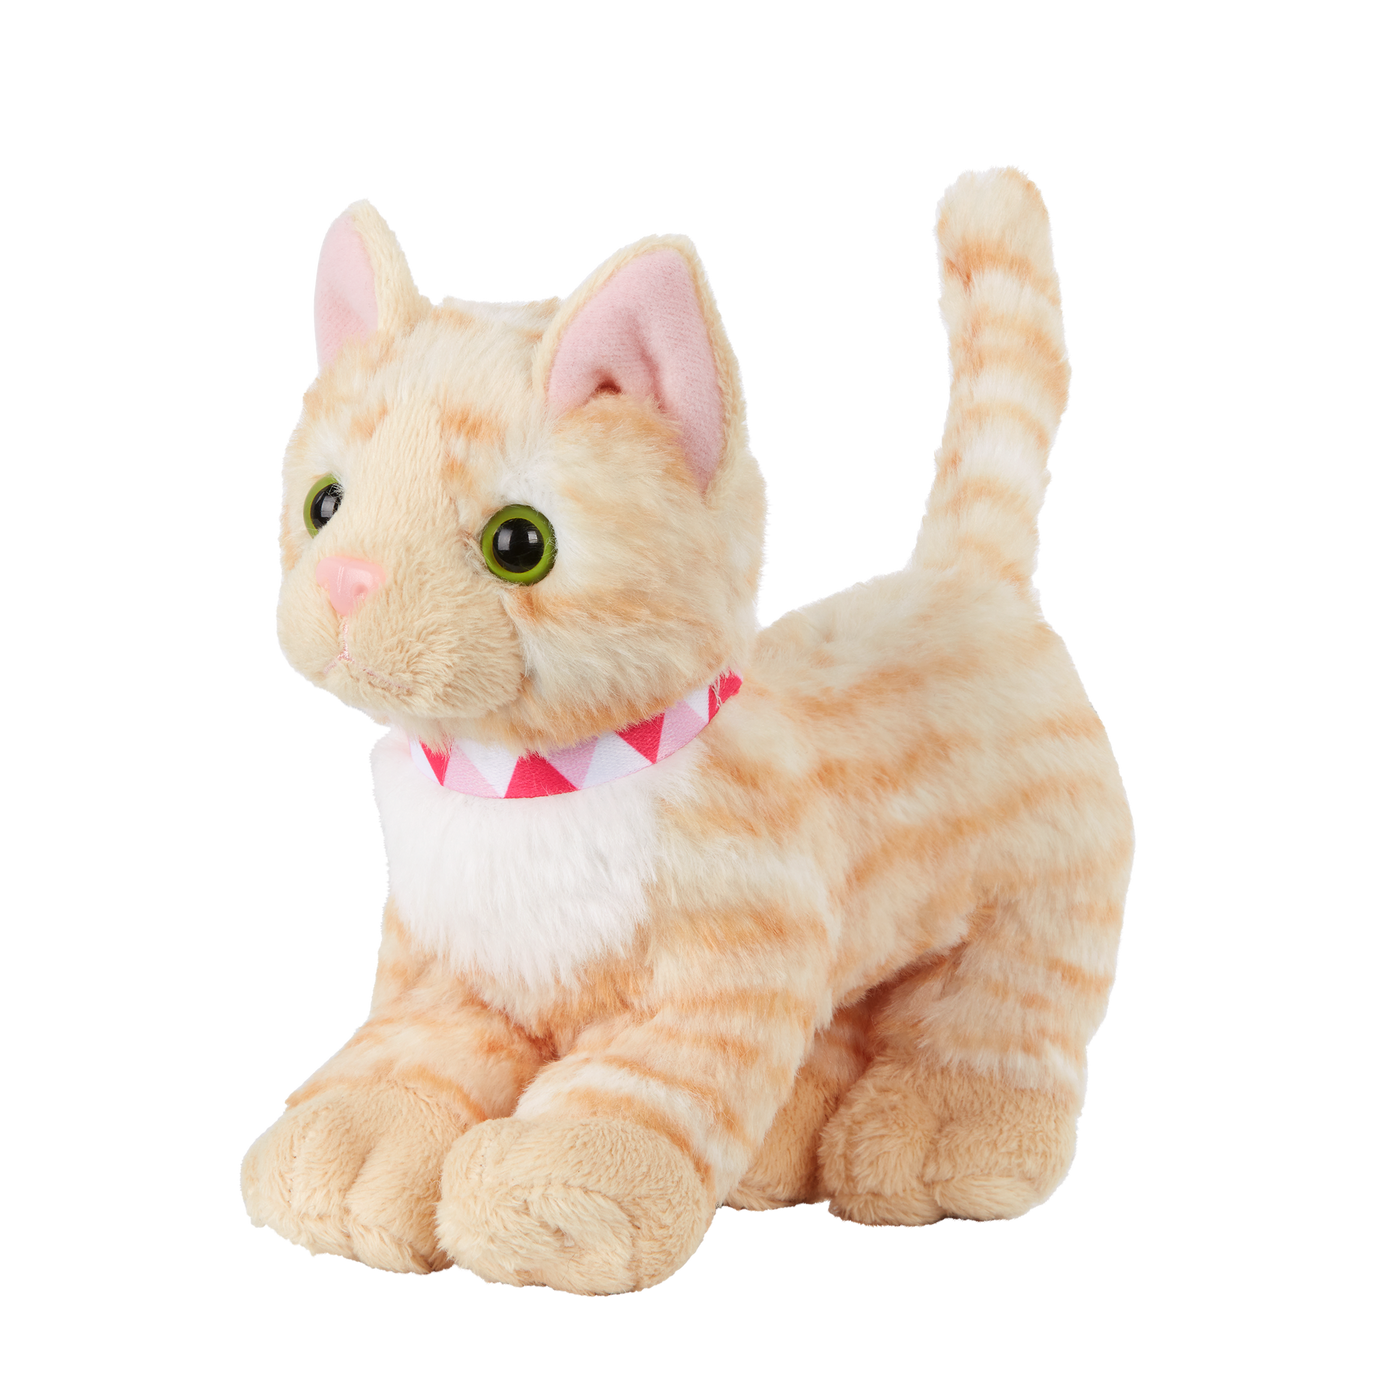 Our Generation 6-inch American Shorthair Kitten Cat Plush